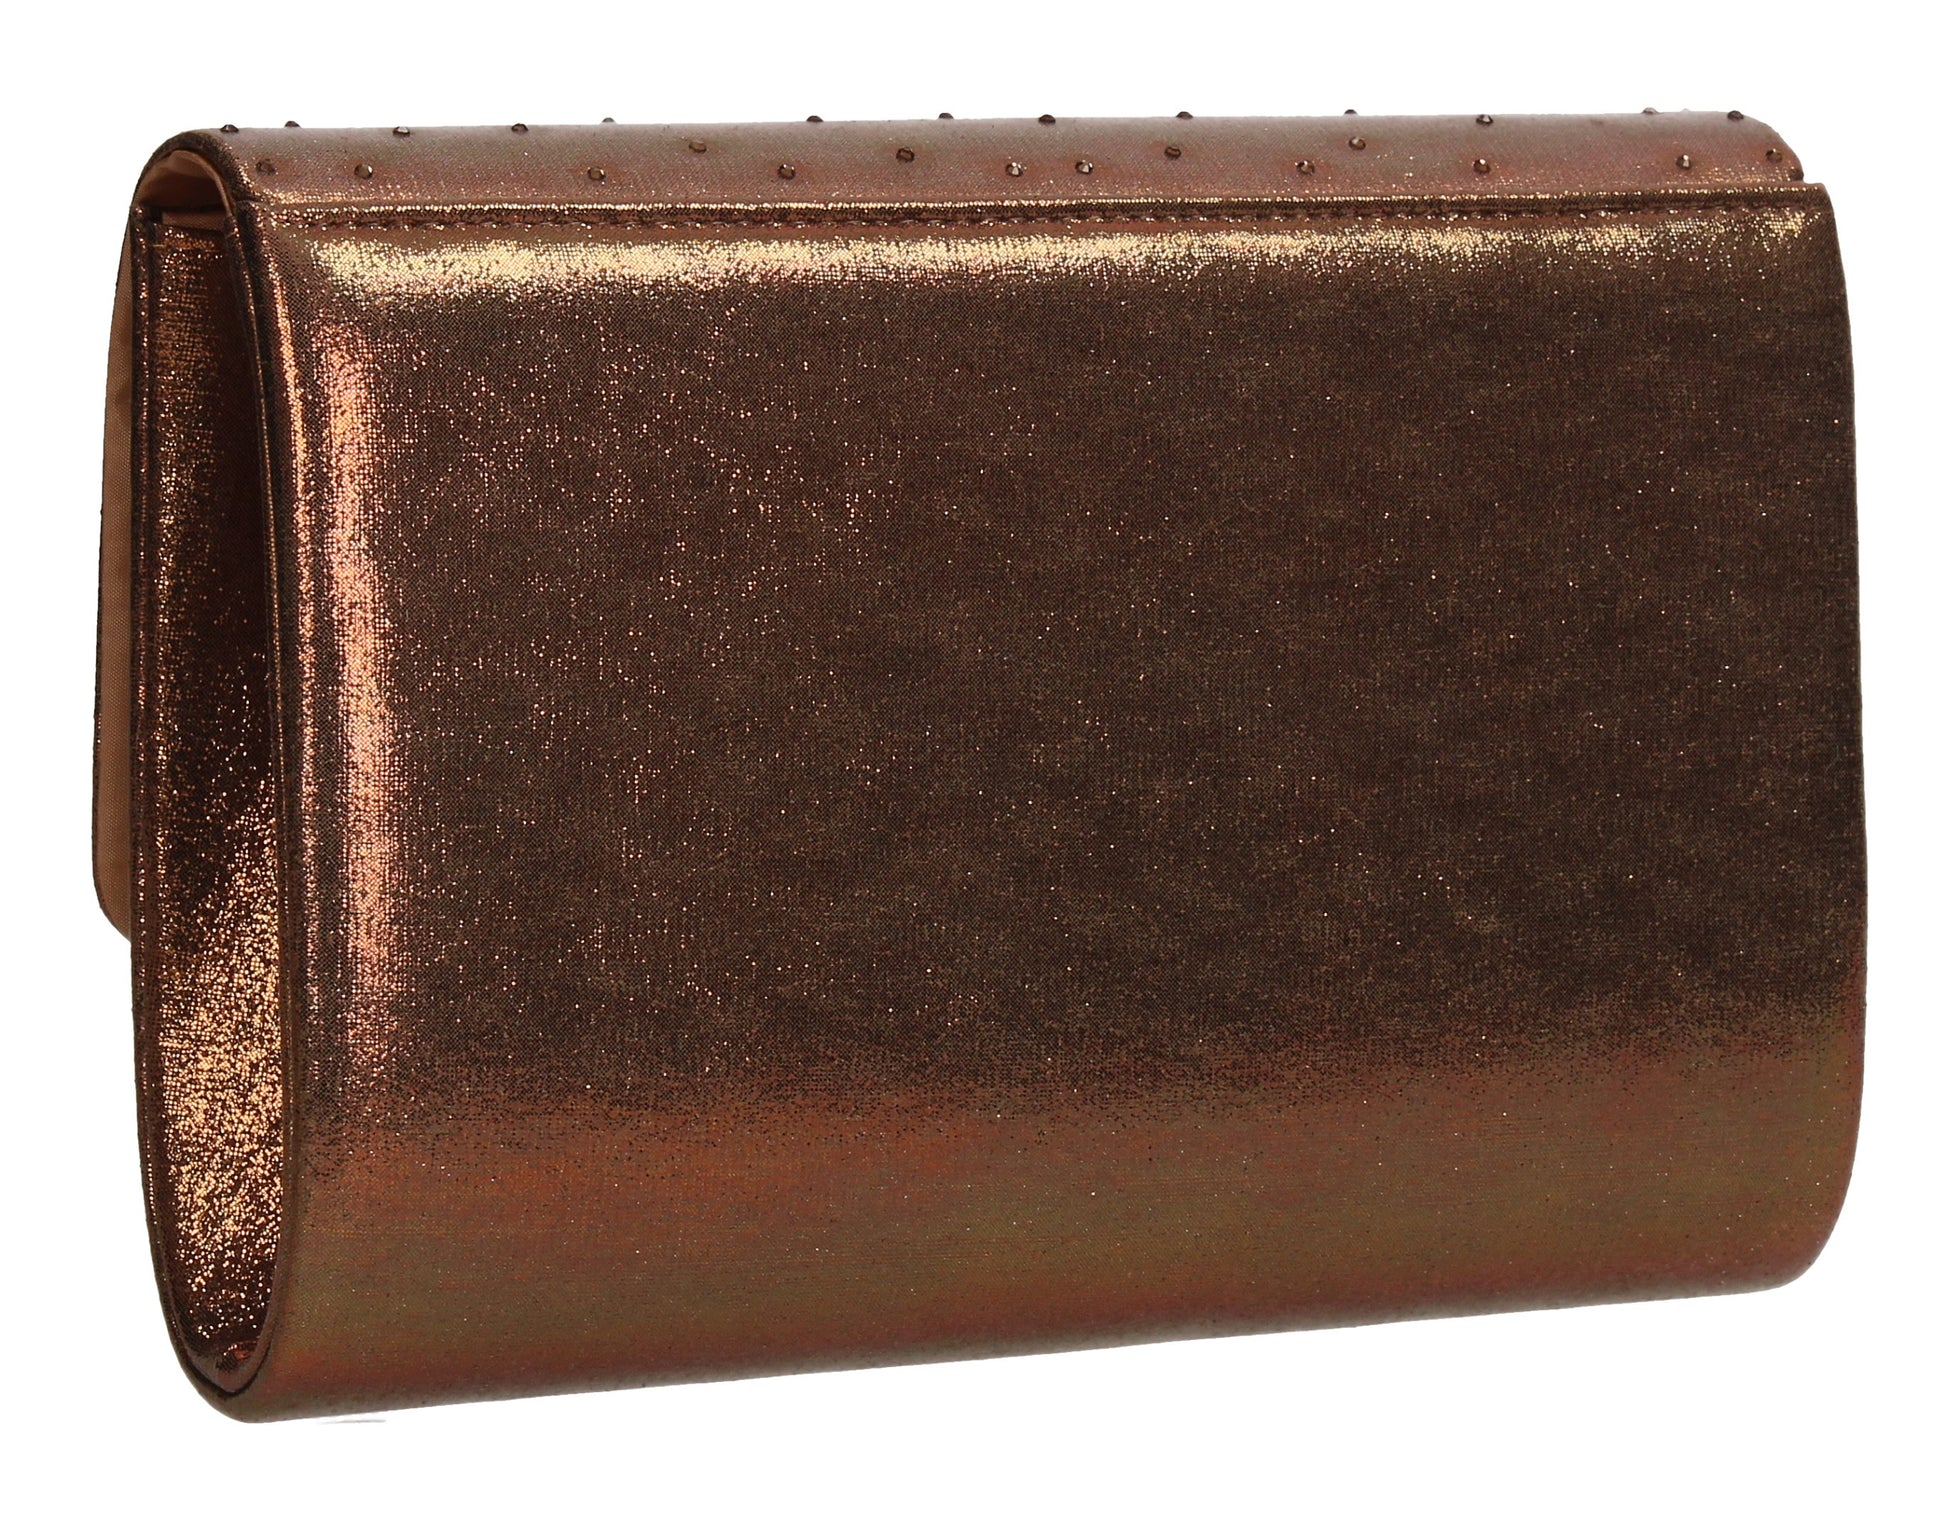 SWANKYSWANS Natalie Diamante Clutch Bag Bronze Cute Cheap Clutch Bag For Weddings School and Work